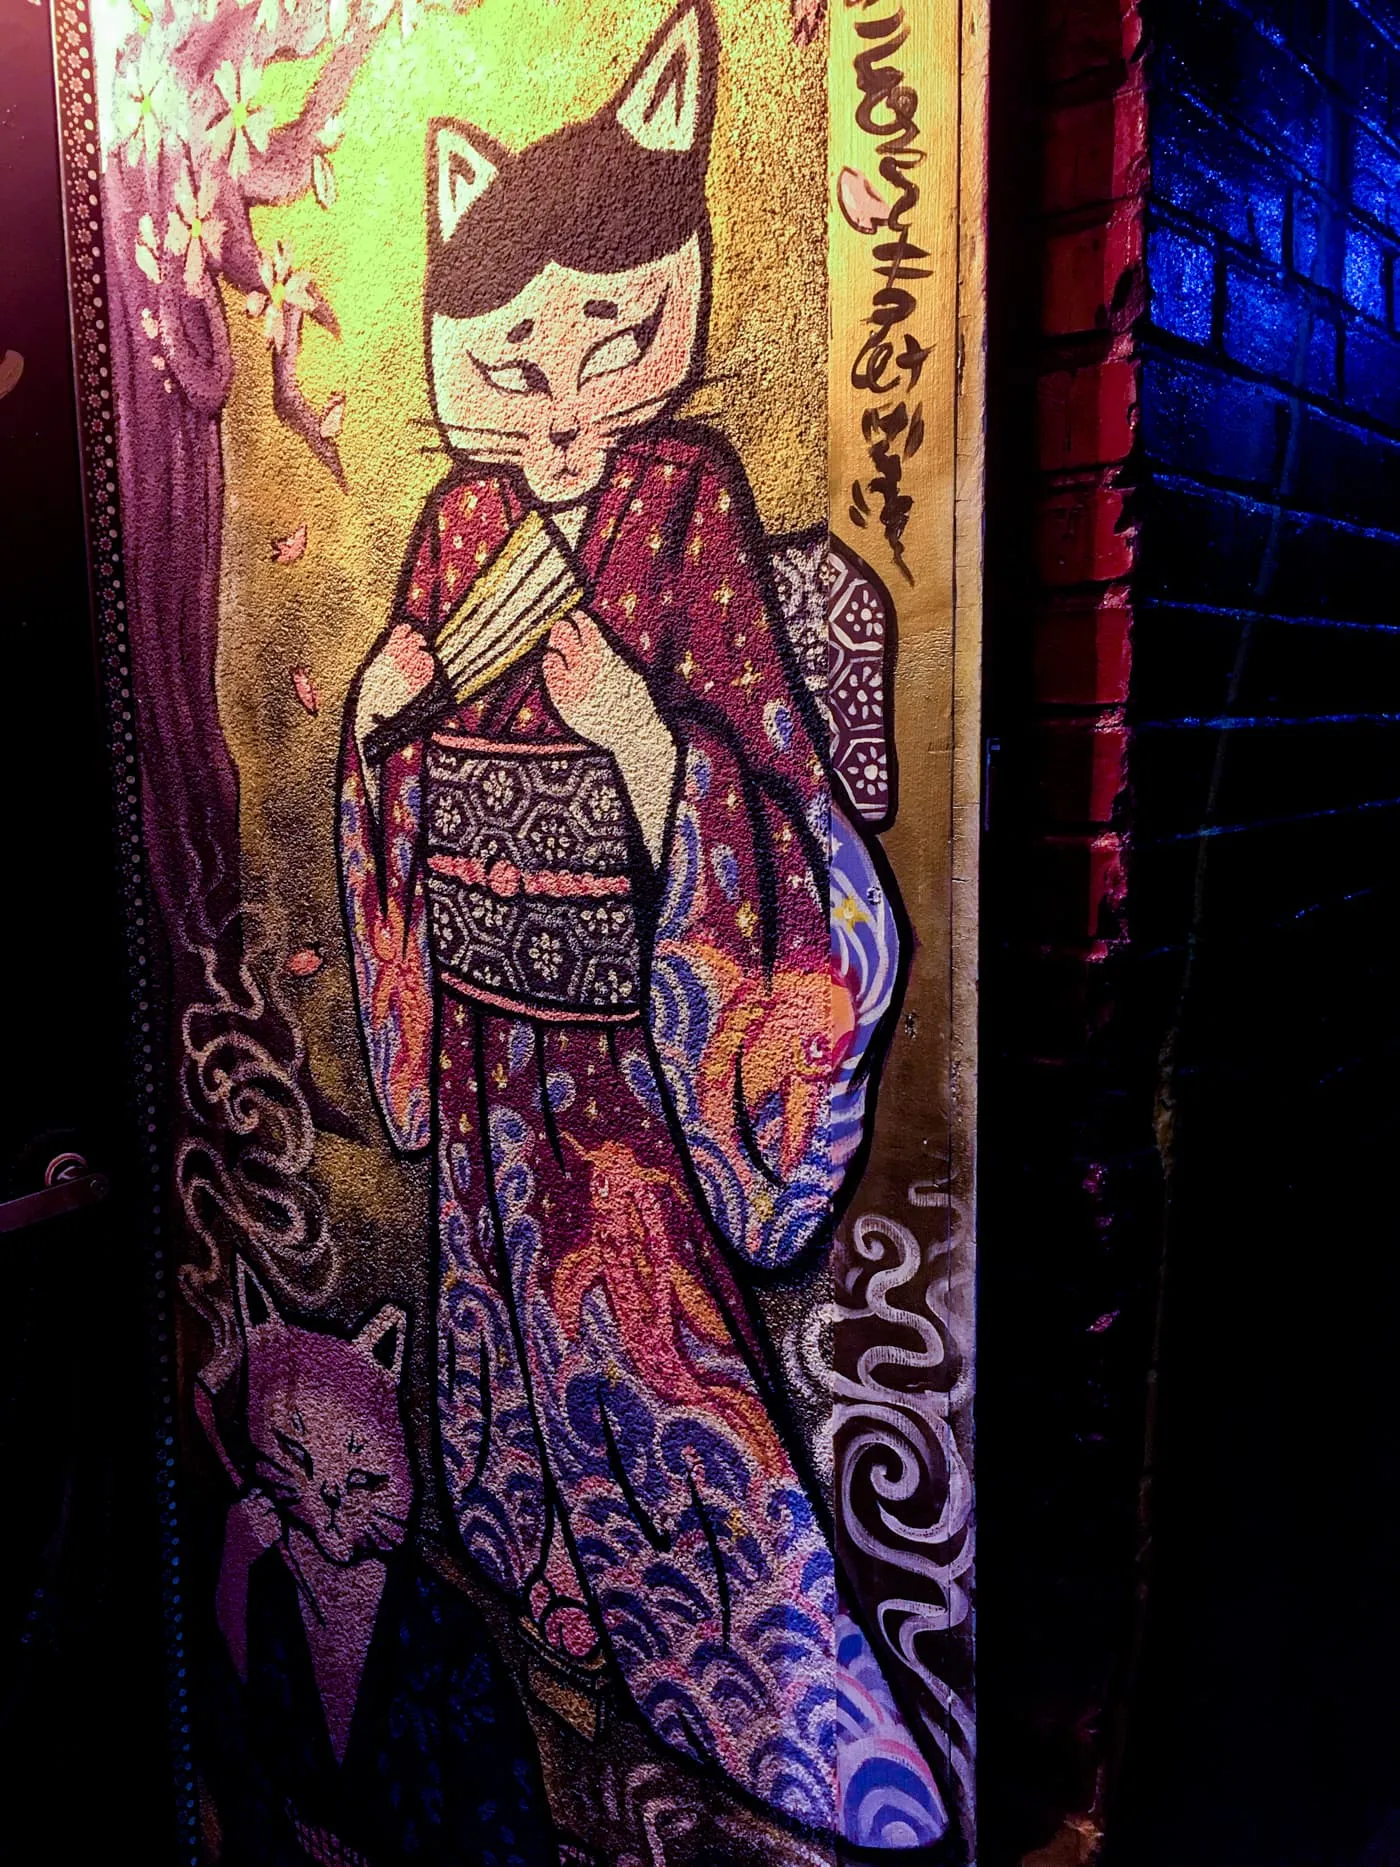 Cat geisha mural at Freak Alley Boise, Idaho Murals - Street Art in Boise, Idaho